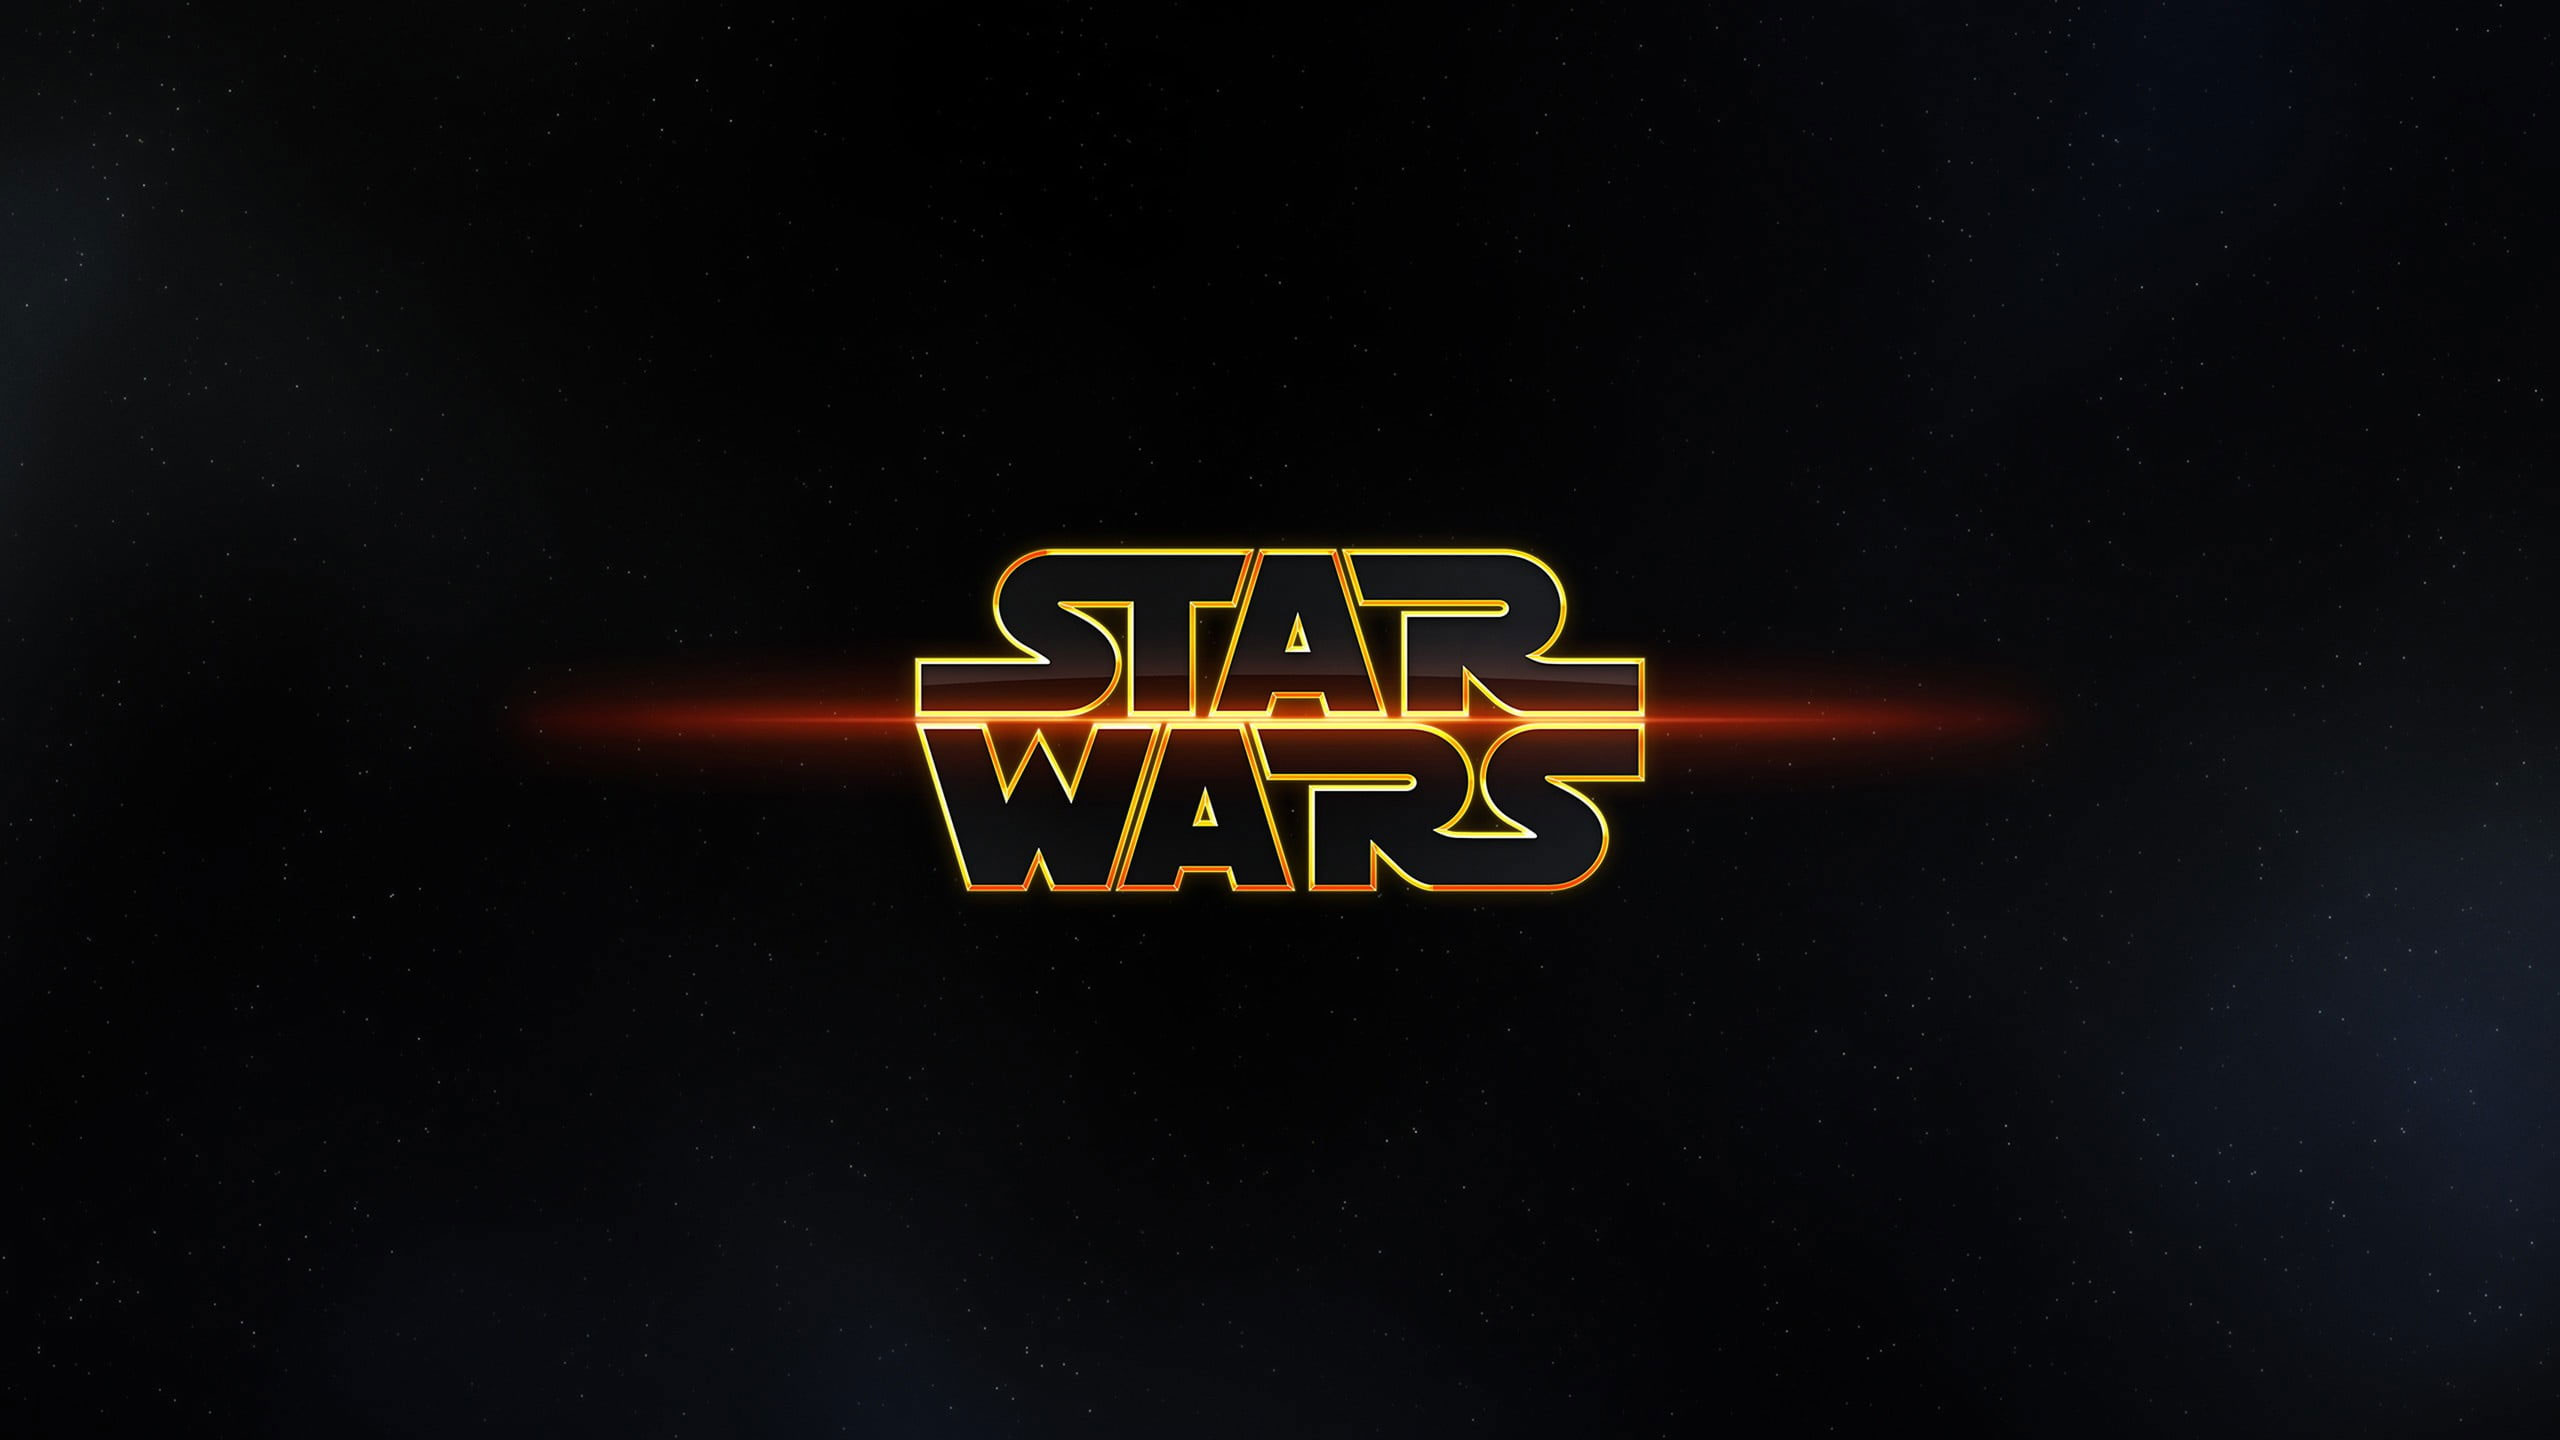 Star Wars logo wallpaper, movies, science fiction, typography, neon, illuminated